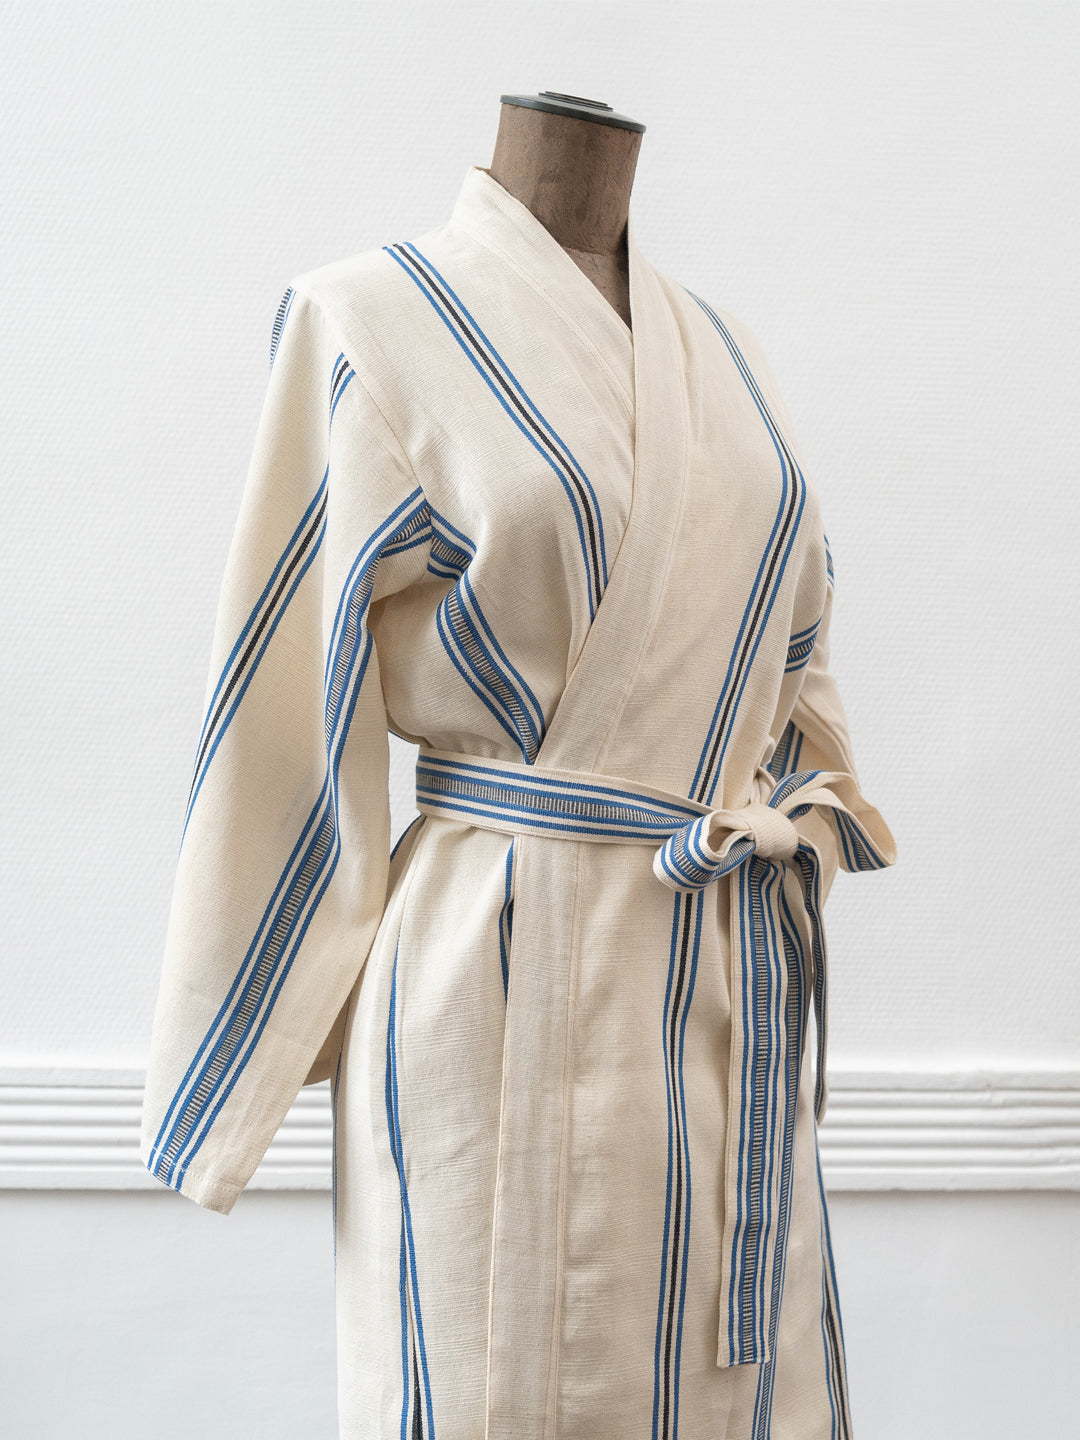 Kimono Tensira teint coton, main la 100% à